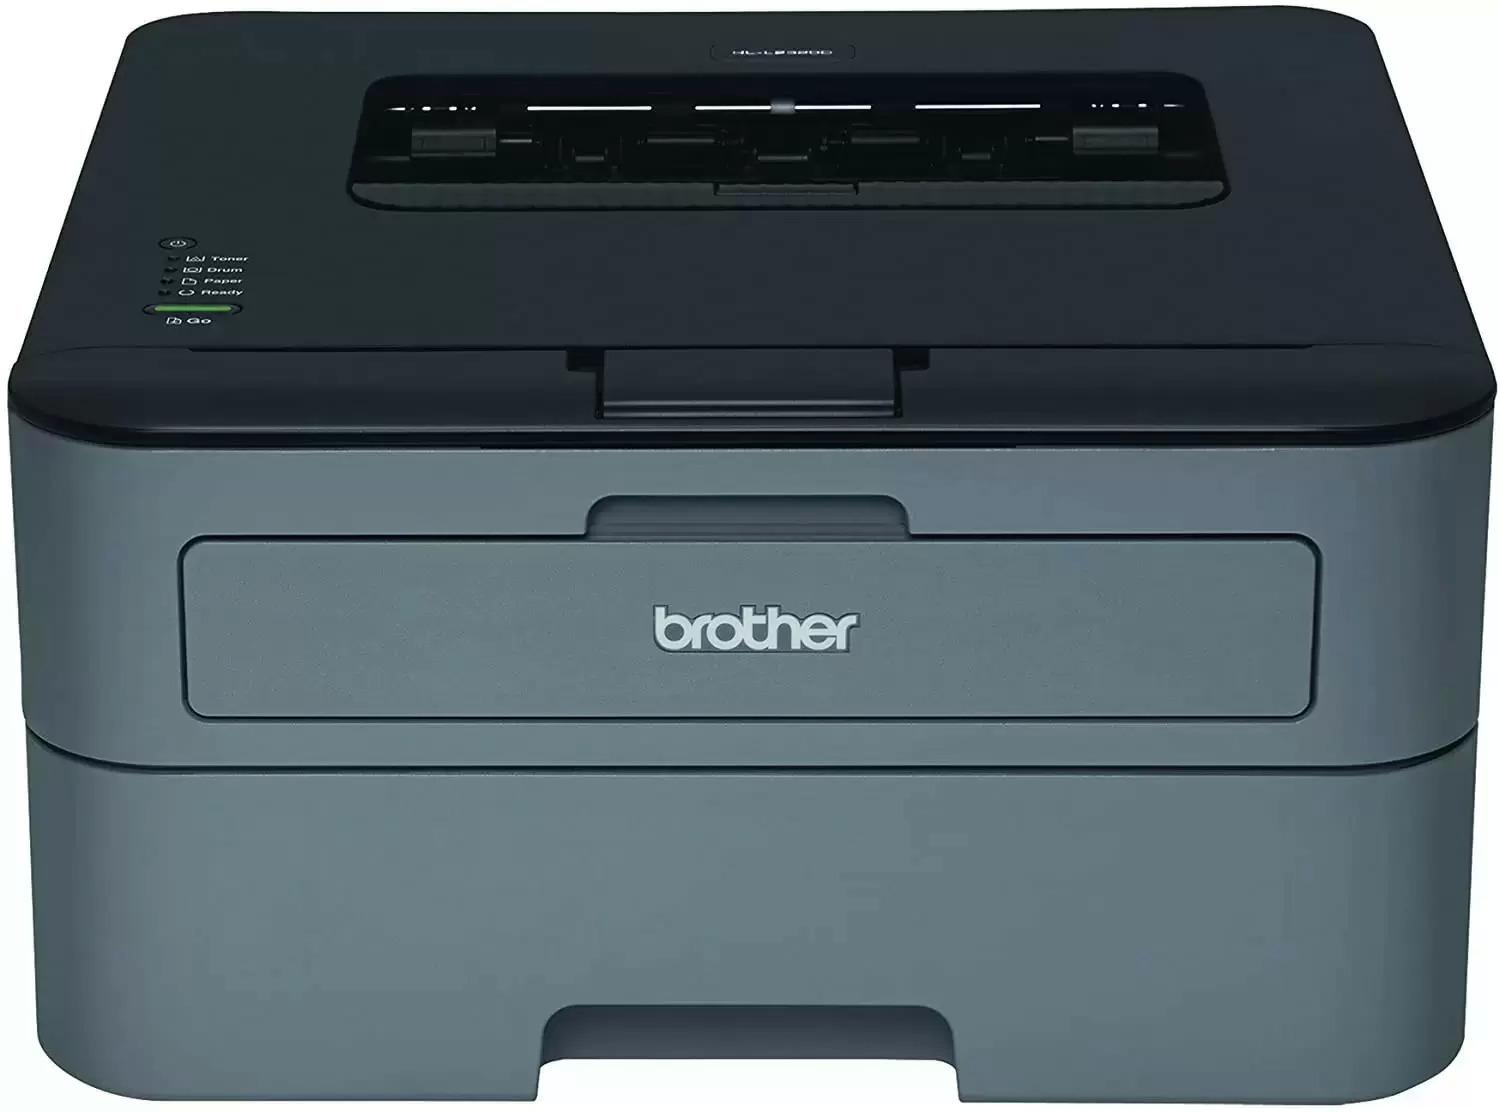 Brother RHLL2320D Refurbished Duplex Laser Printer for $90.24 Shipped